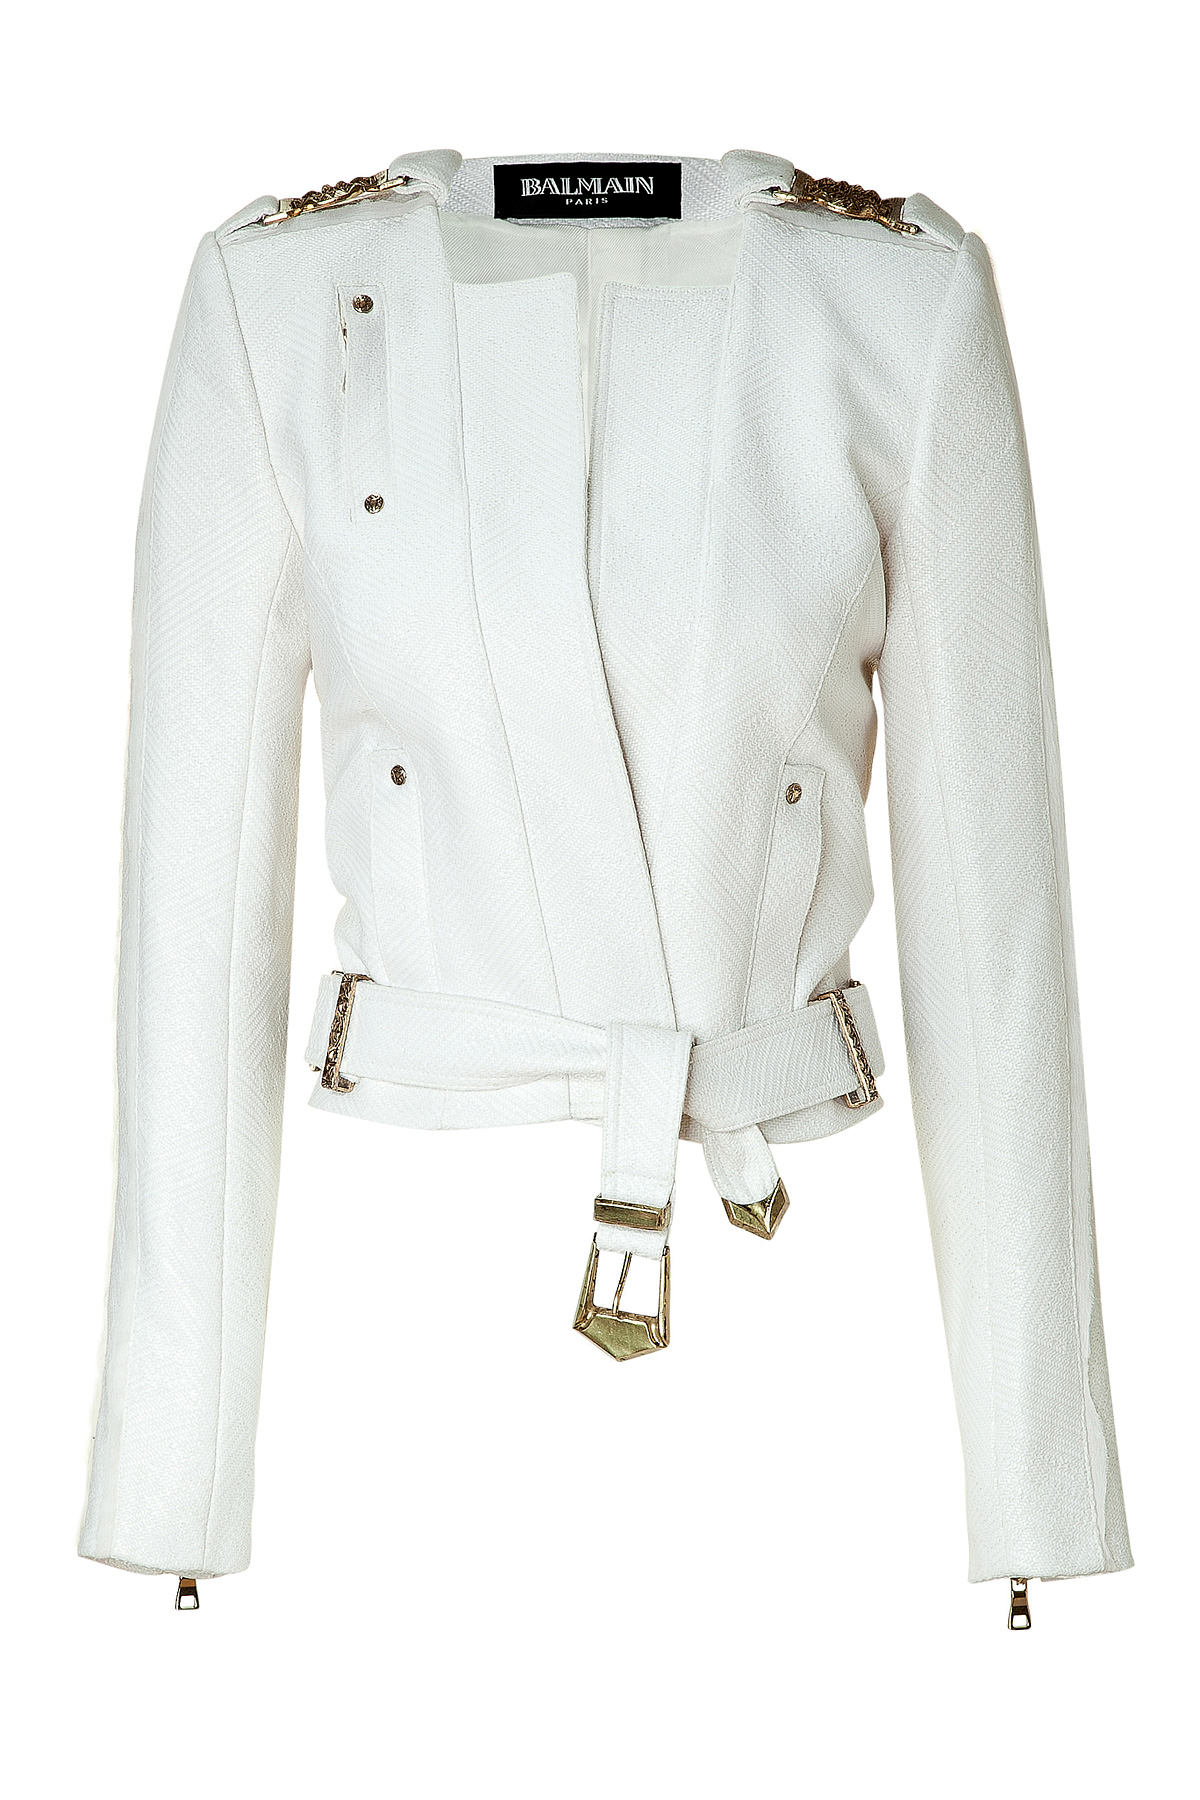 Balmain Cream Cropped Belted Jacket in Beige (cream) | Lyst